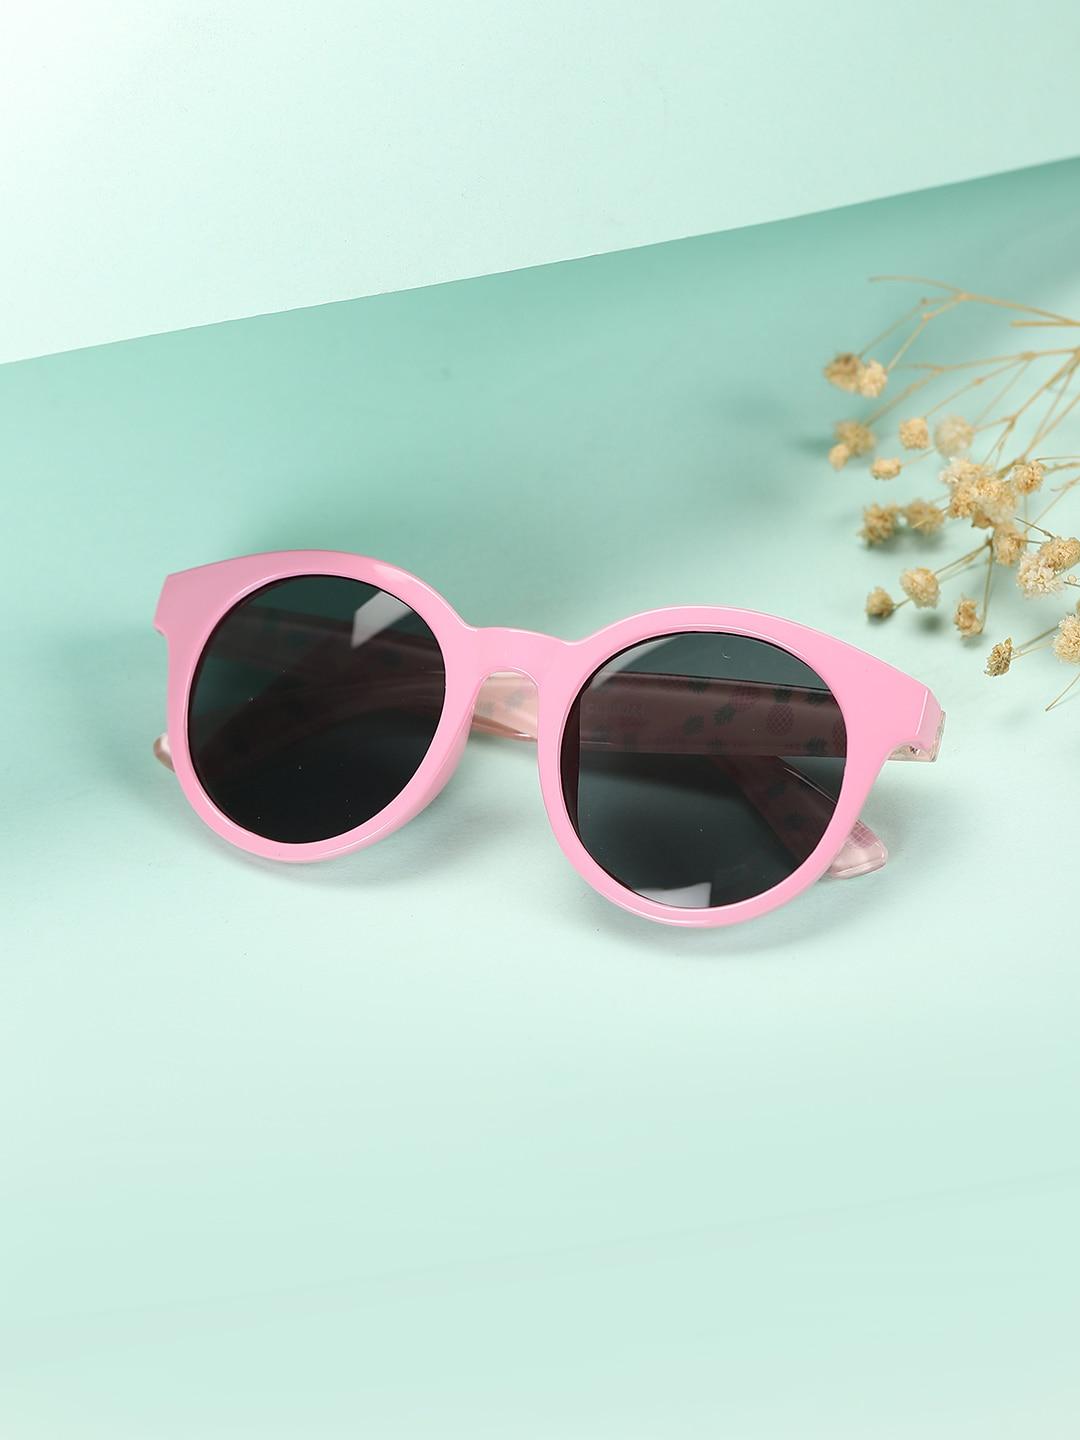 Carlton London Girls Black Lens & Pink Cateye Sunglasses CLSG044